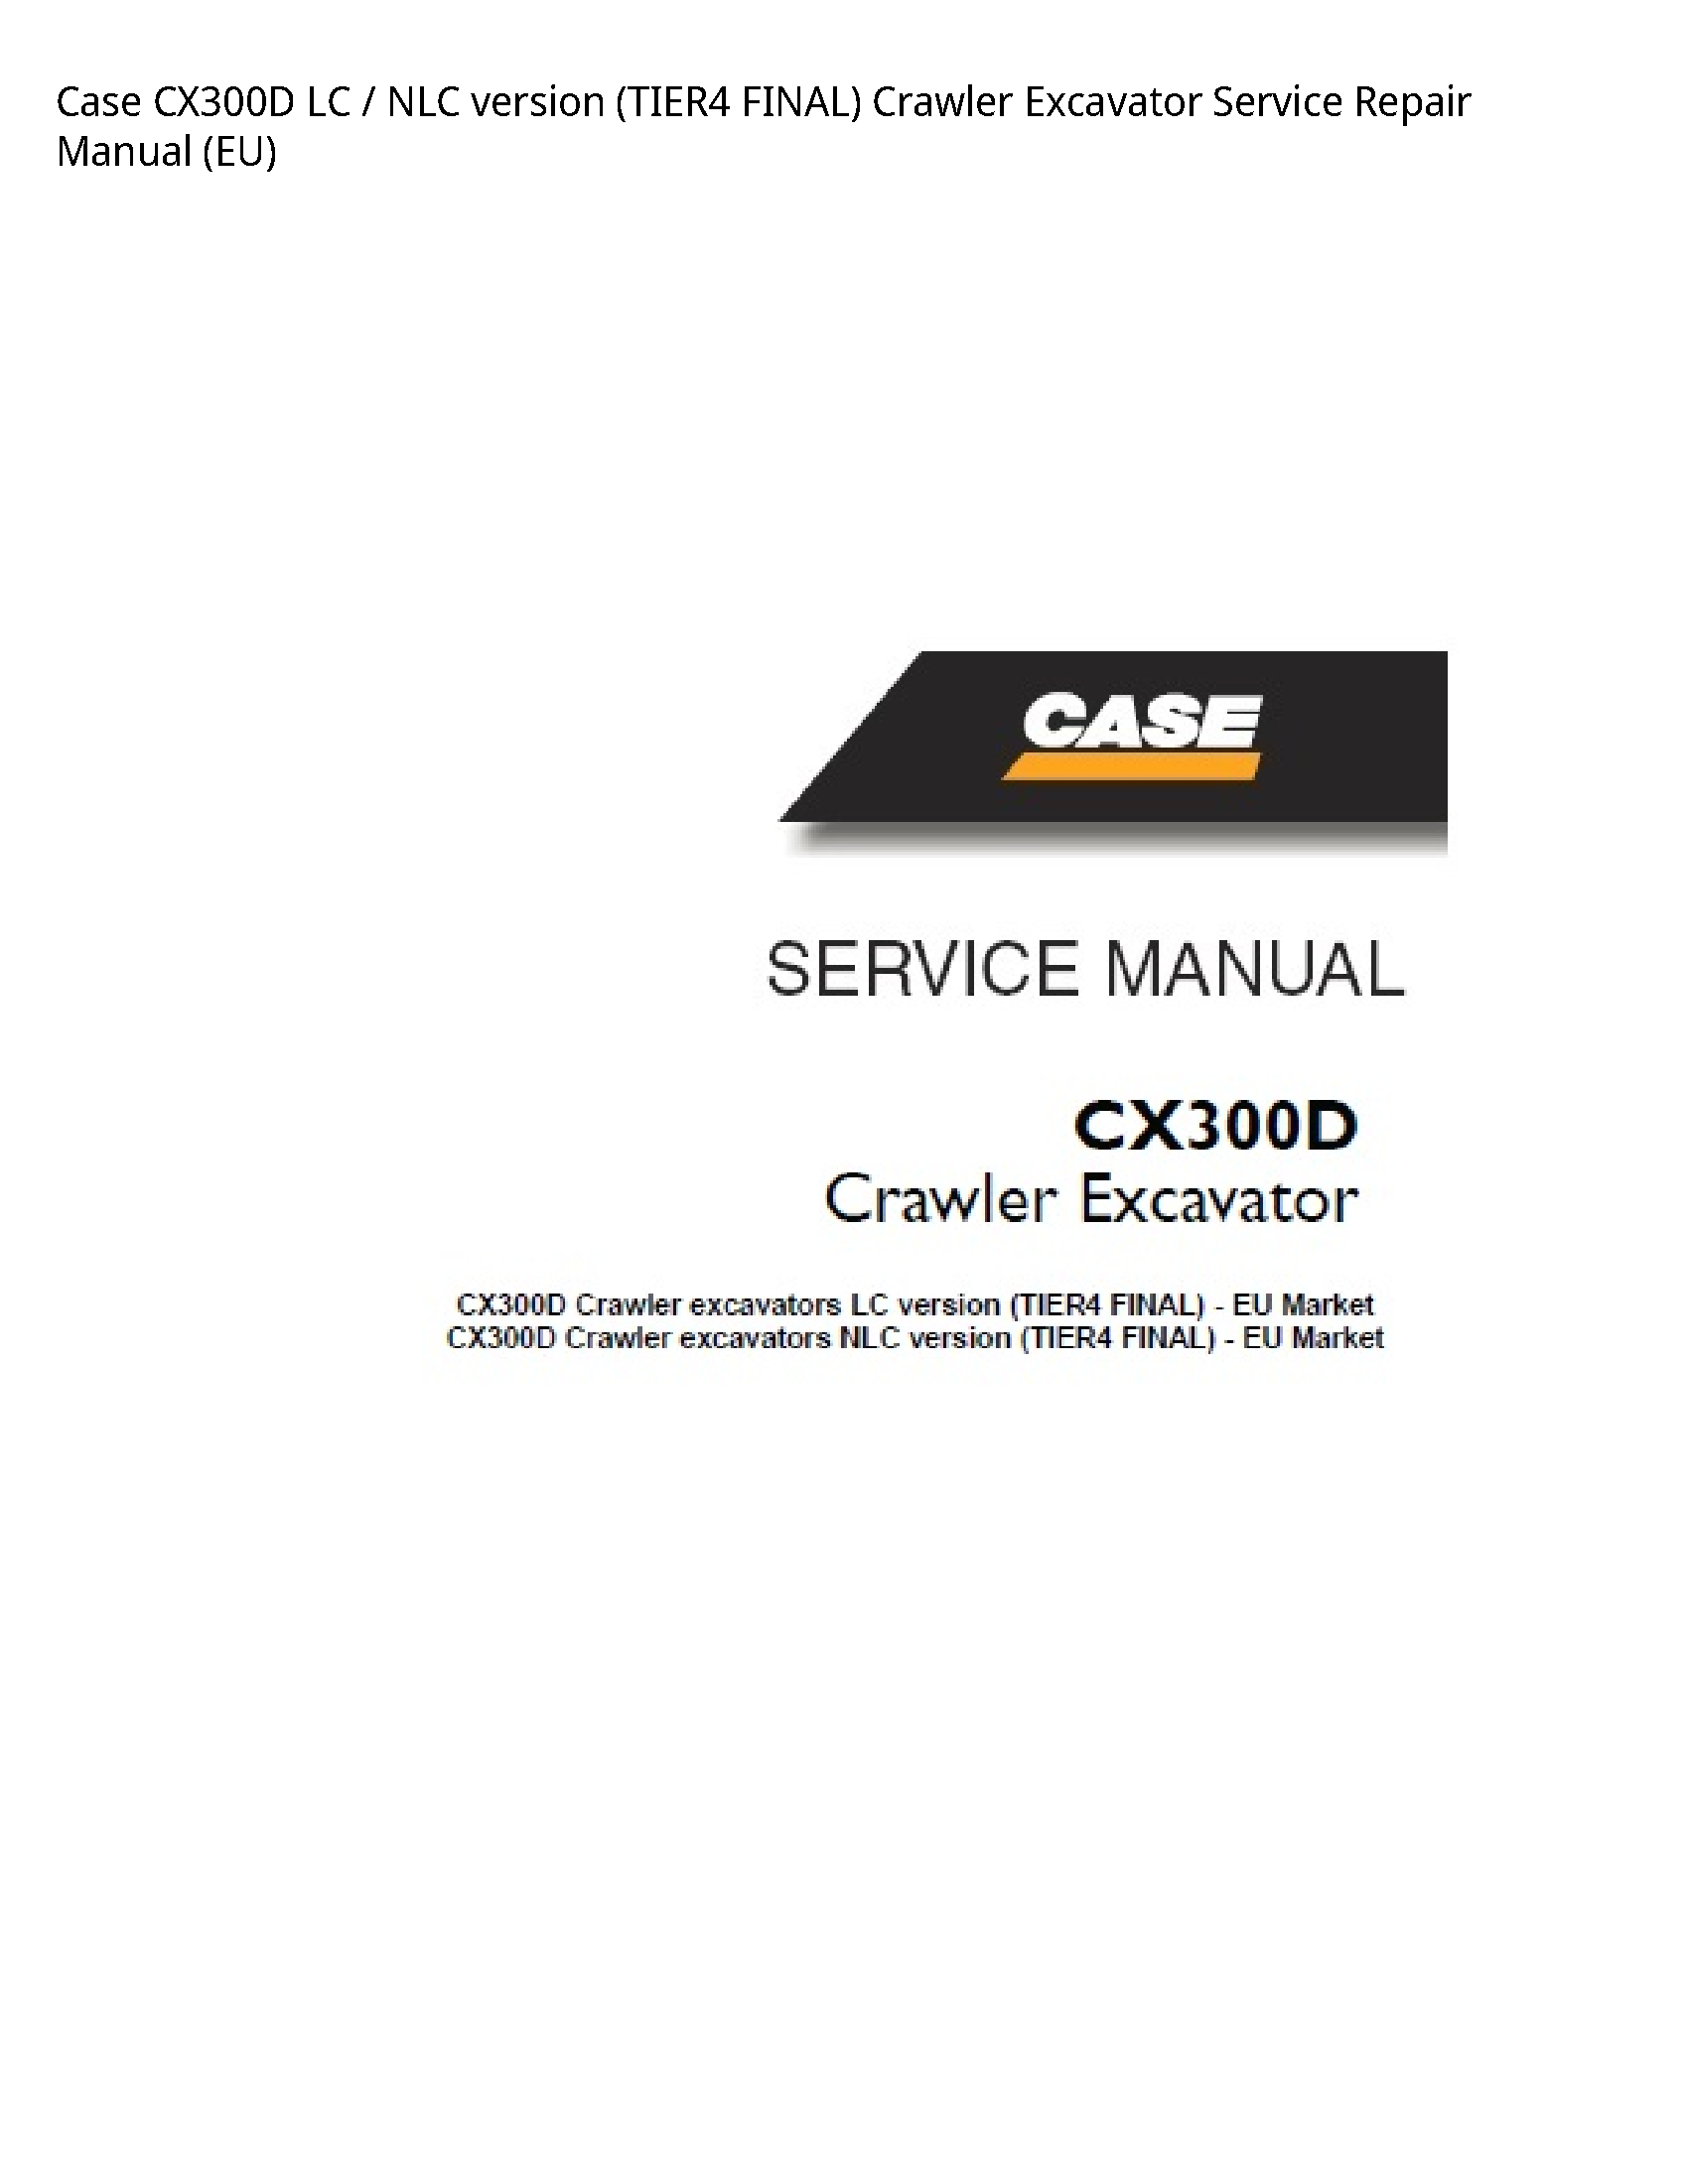 Case/Case IH CX300D LC NLC version FINAL) Crawler Excavator manual